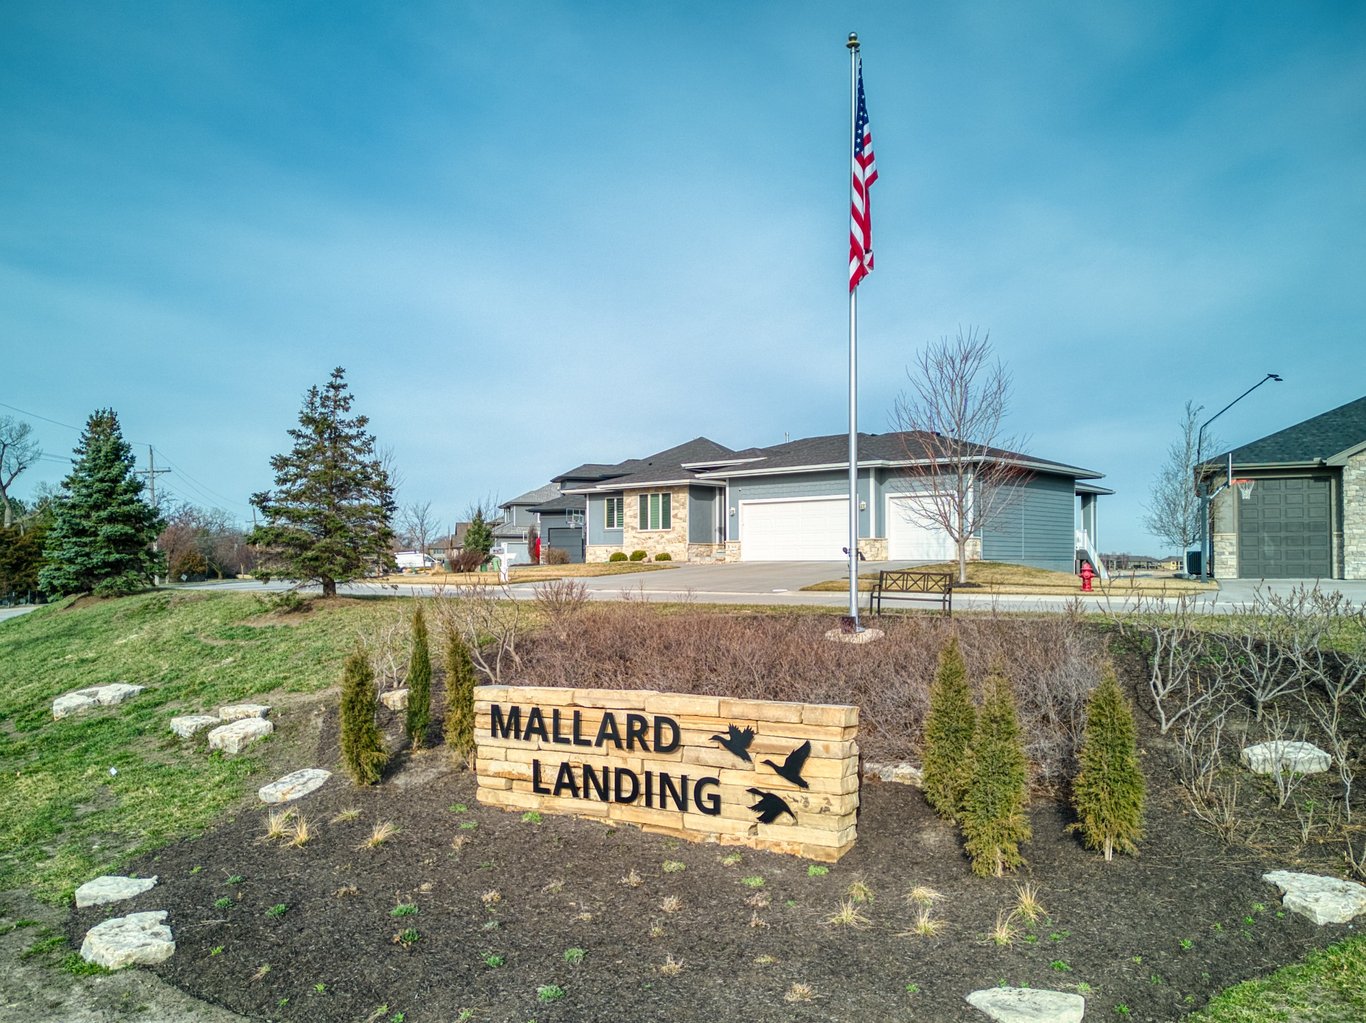 Mallard Landing Neighborhood Sign - Valley, Nebraska